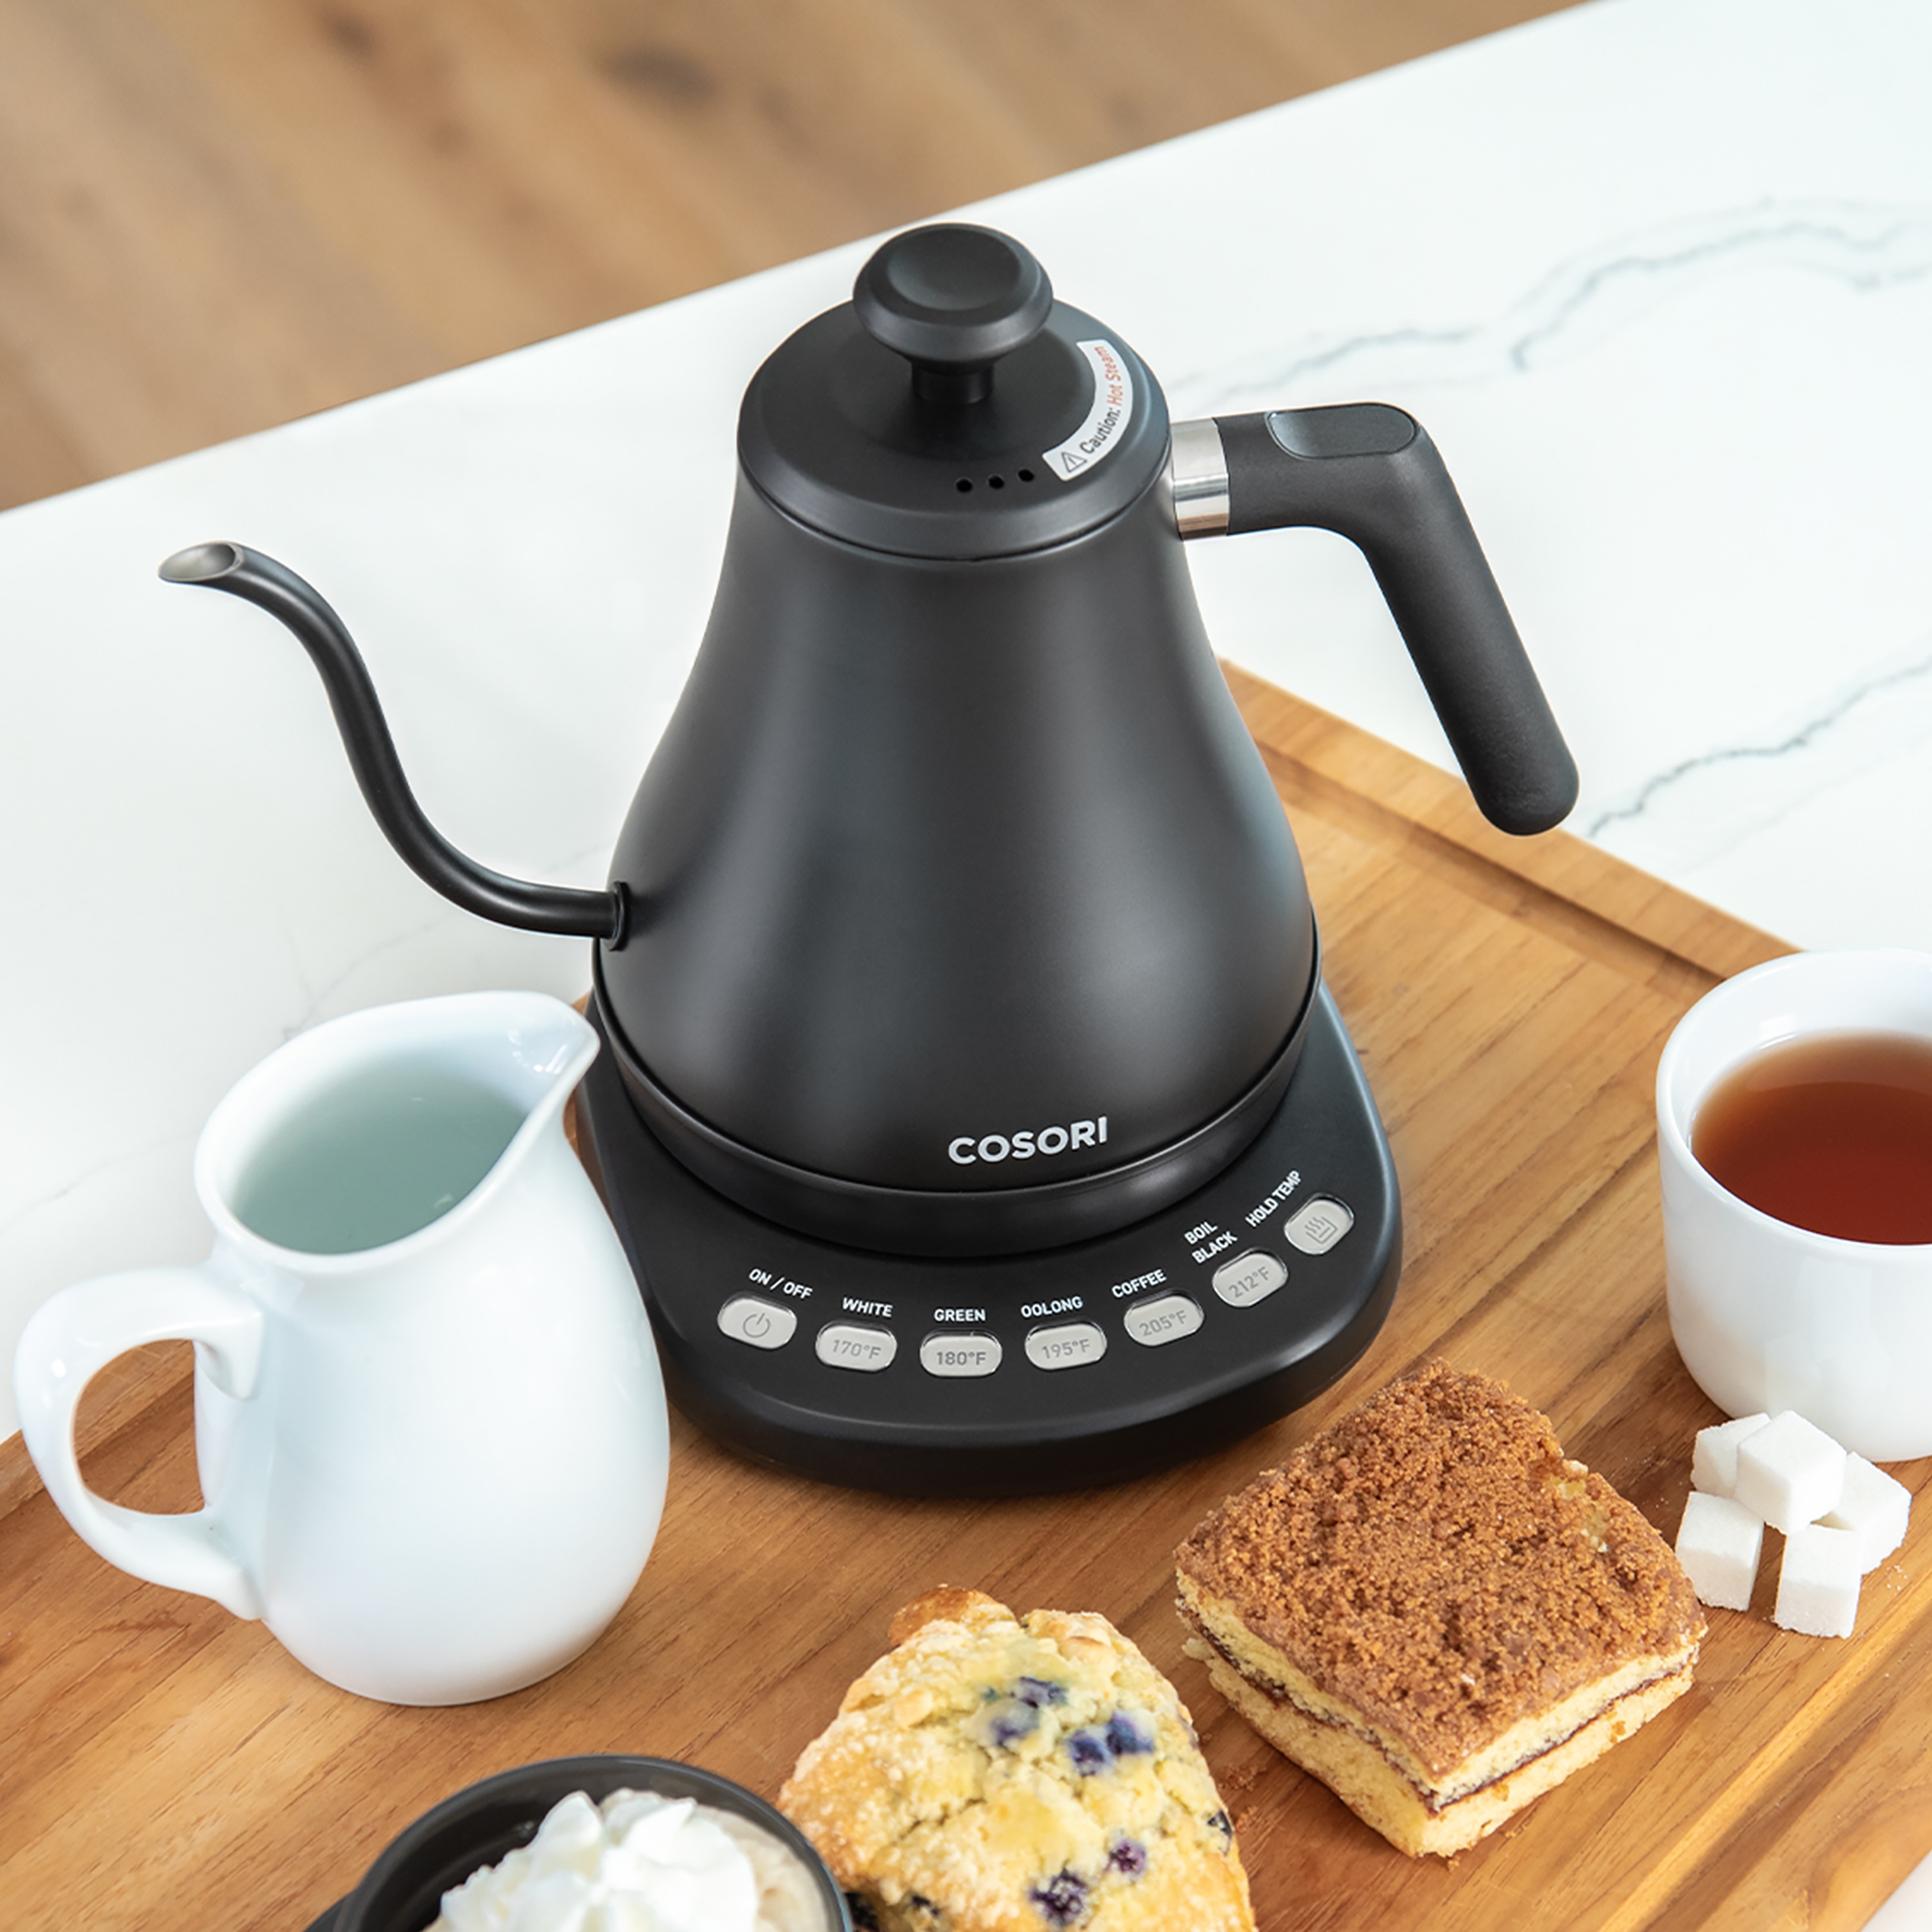 COSORI Gooseneck Kettle Review: An Efficient Electric Tea Kettle